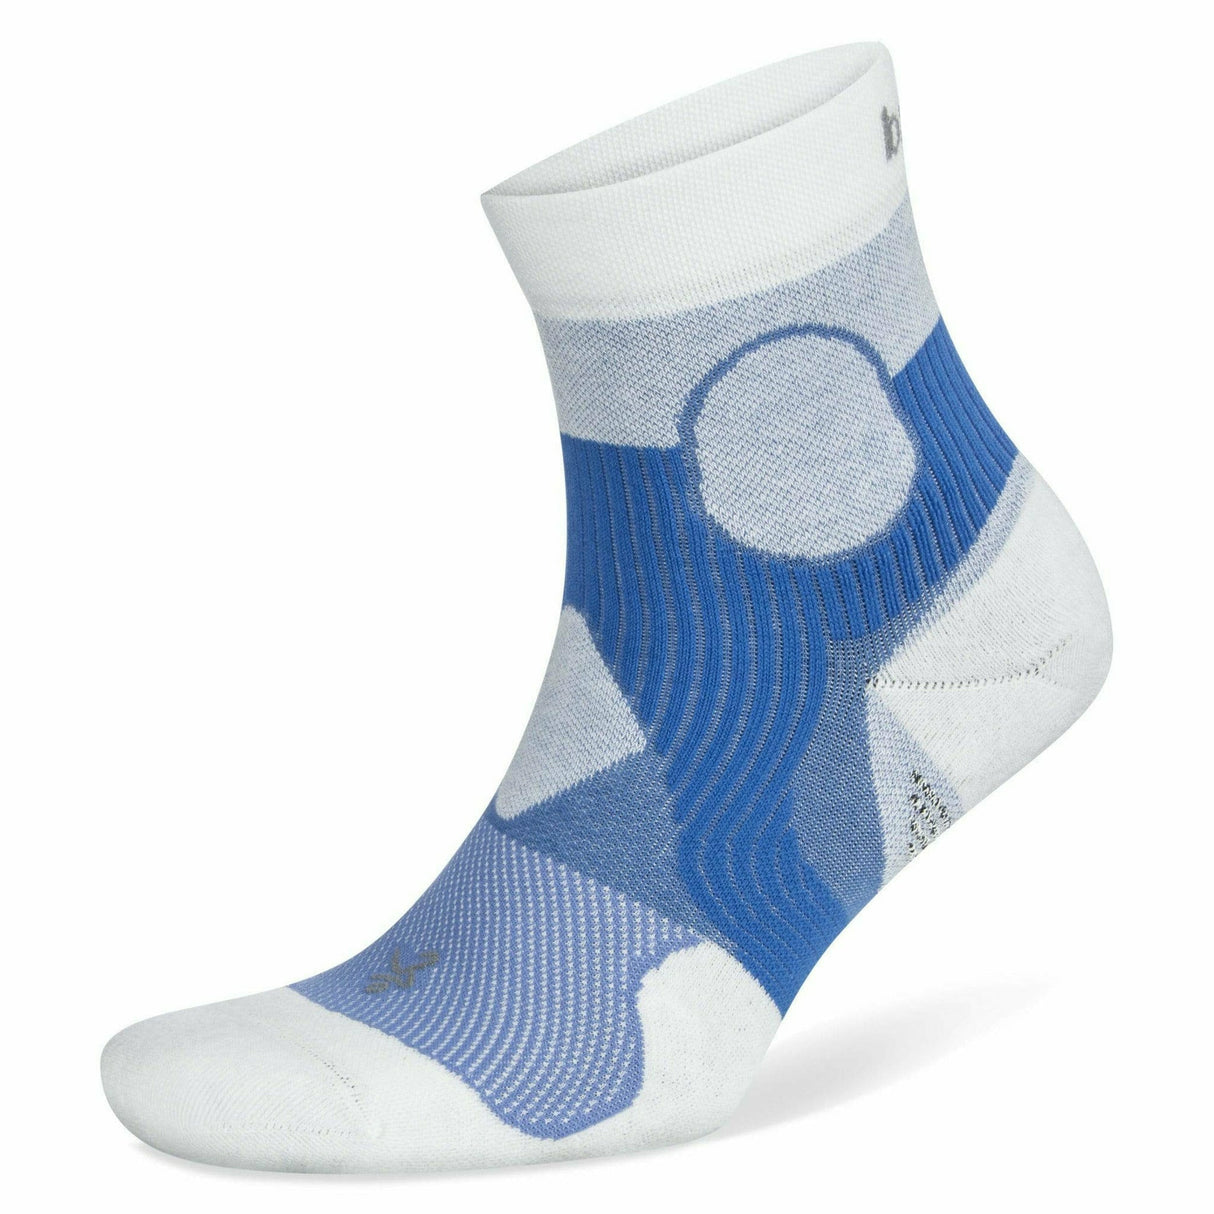 Balega Support Quarter Socks  -  Small / Palace Blue/White